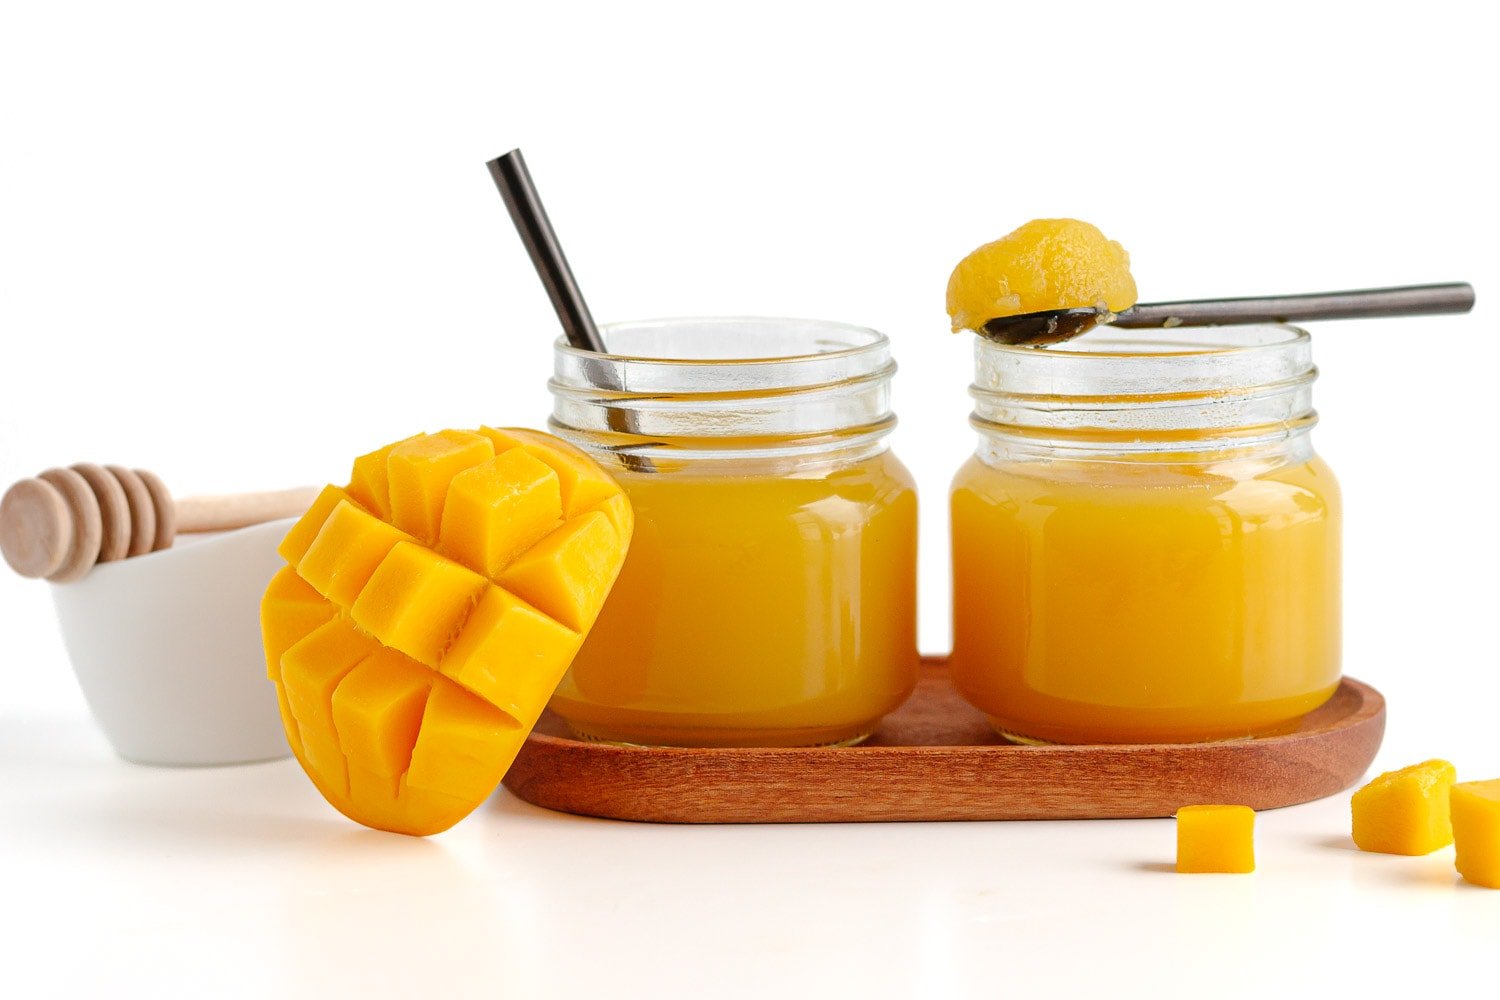 Homemade mango jello in 2 glass jars next to some sliced fresh mango and a small honey bowl.